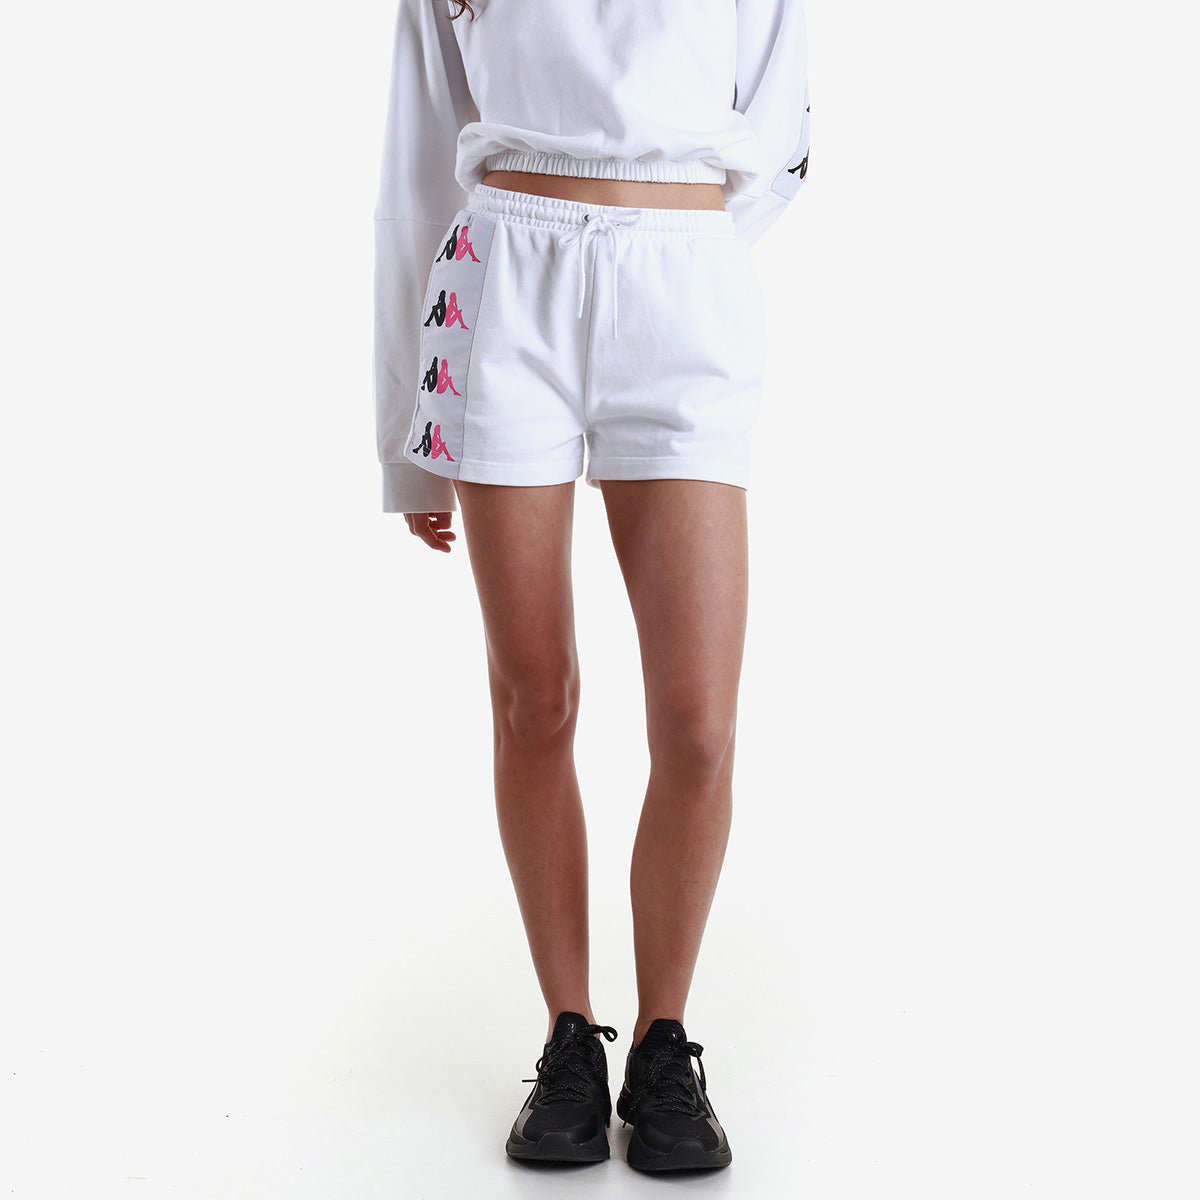 Pantalones cortos Blancos Latte Authentic Mujer - imagen 1